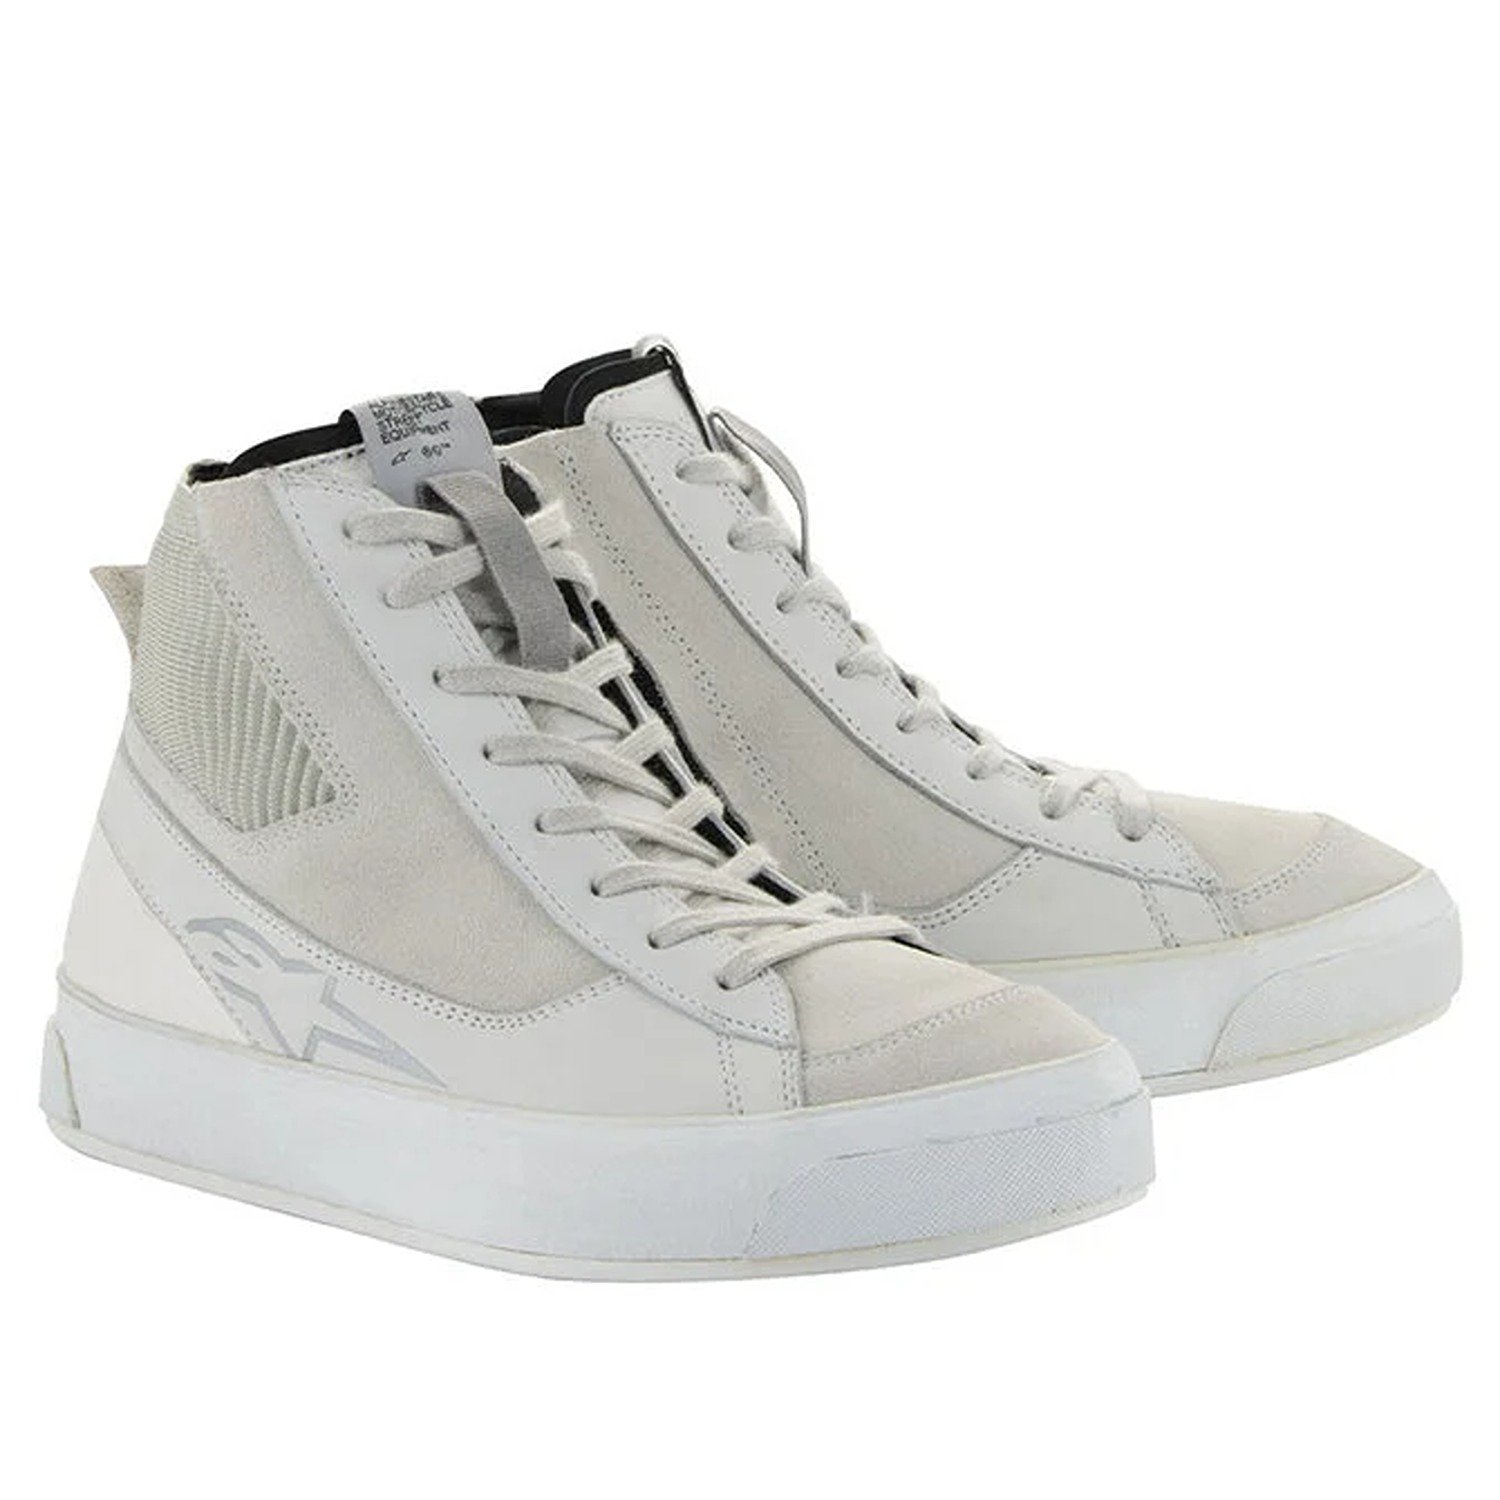 Image of Alpinestars Stella Stated Podium Shoes White Cool Gray Größe US 10